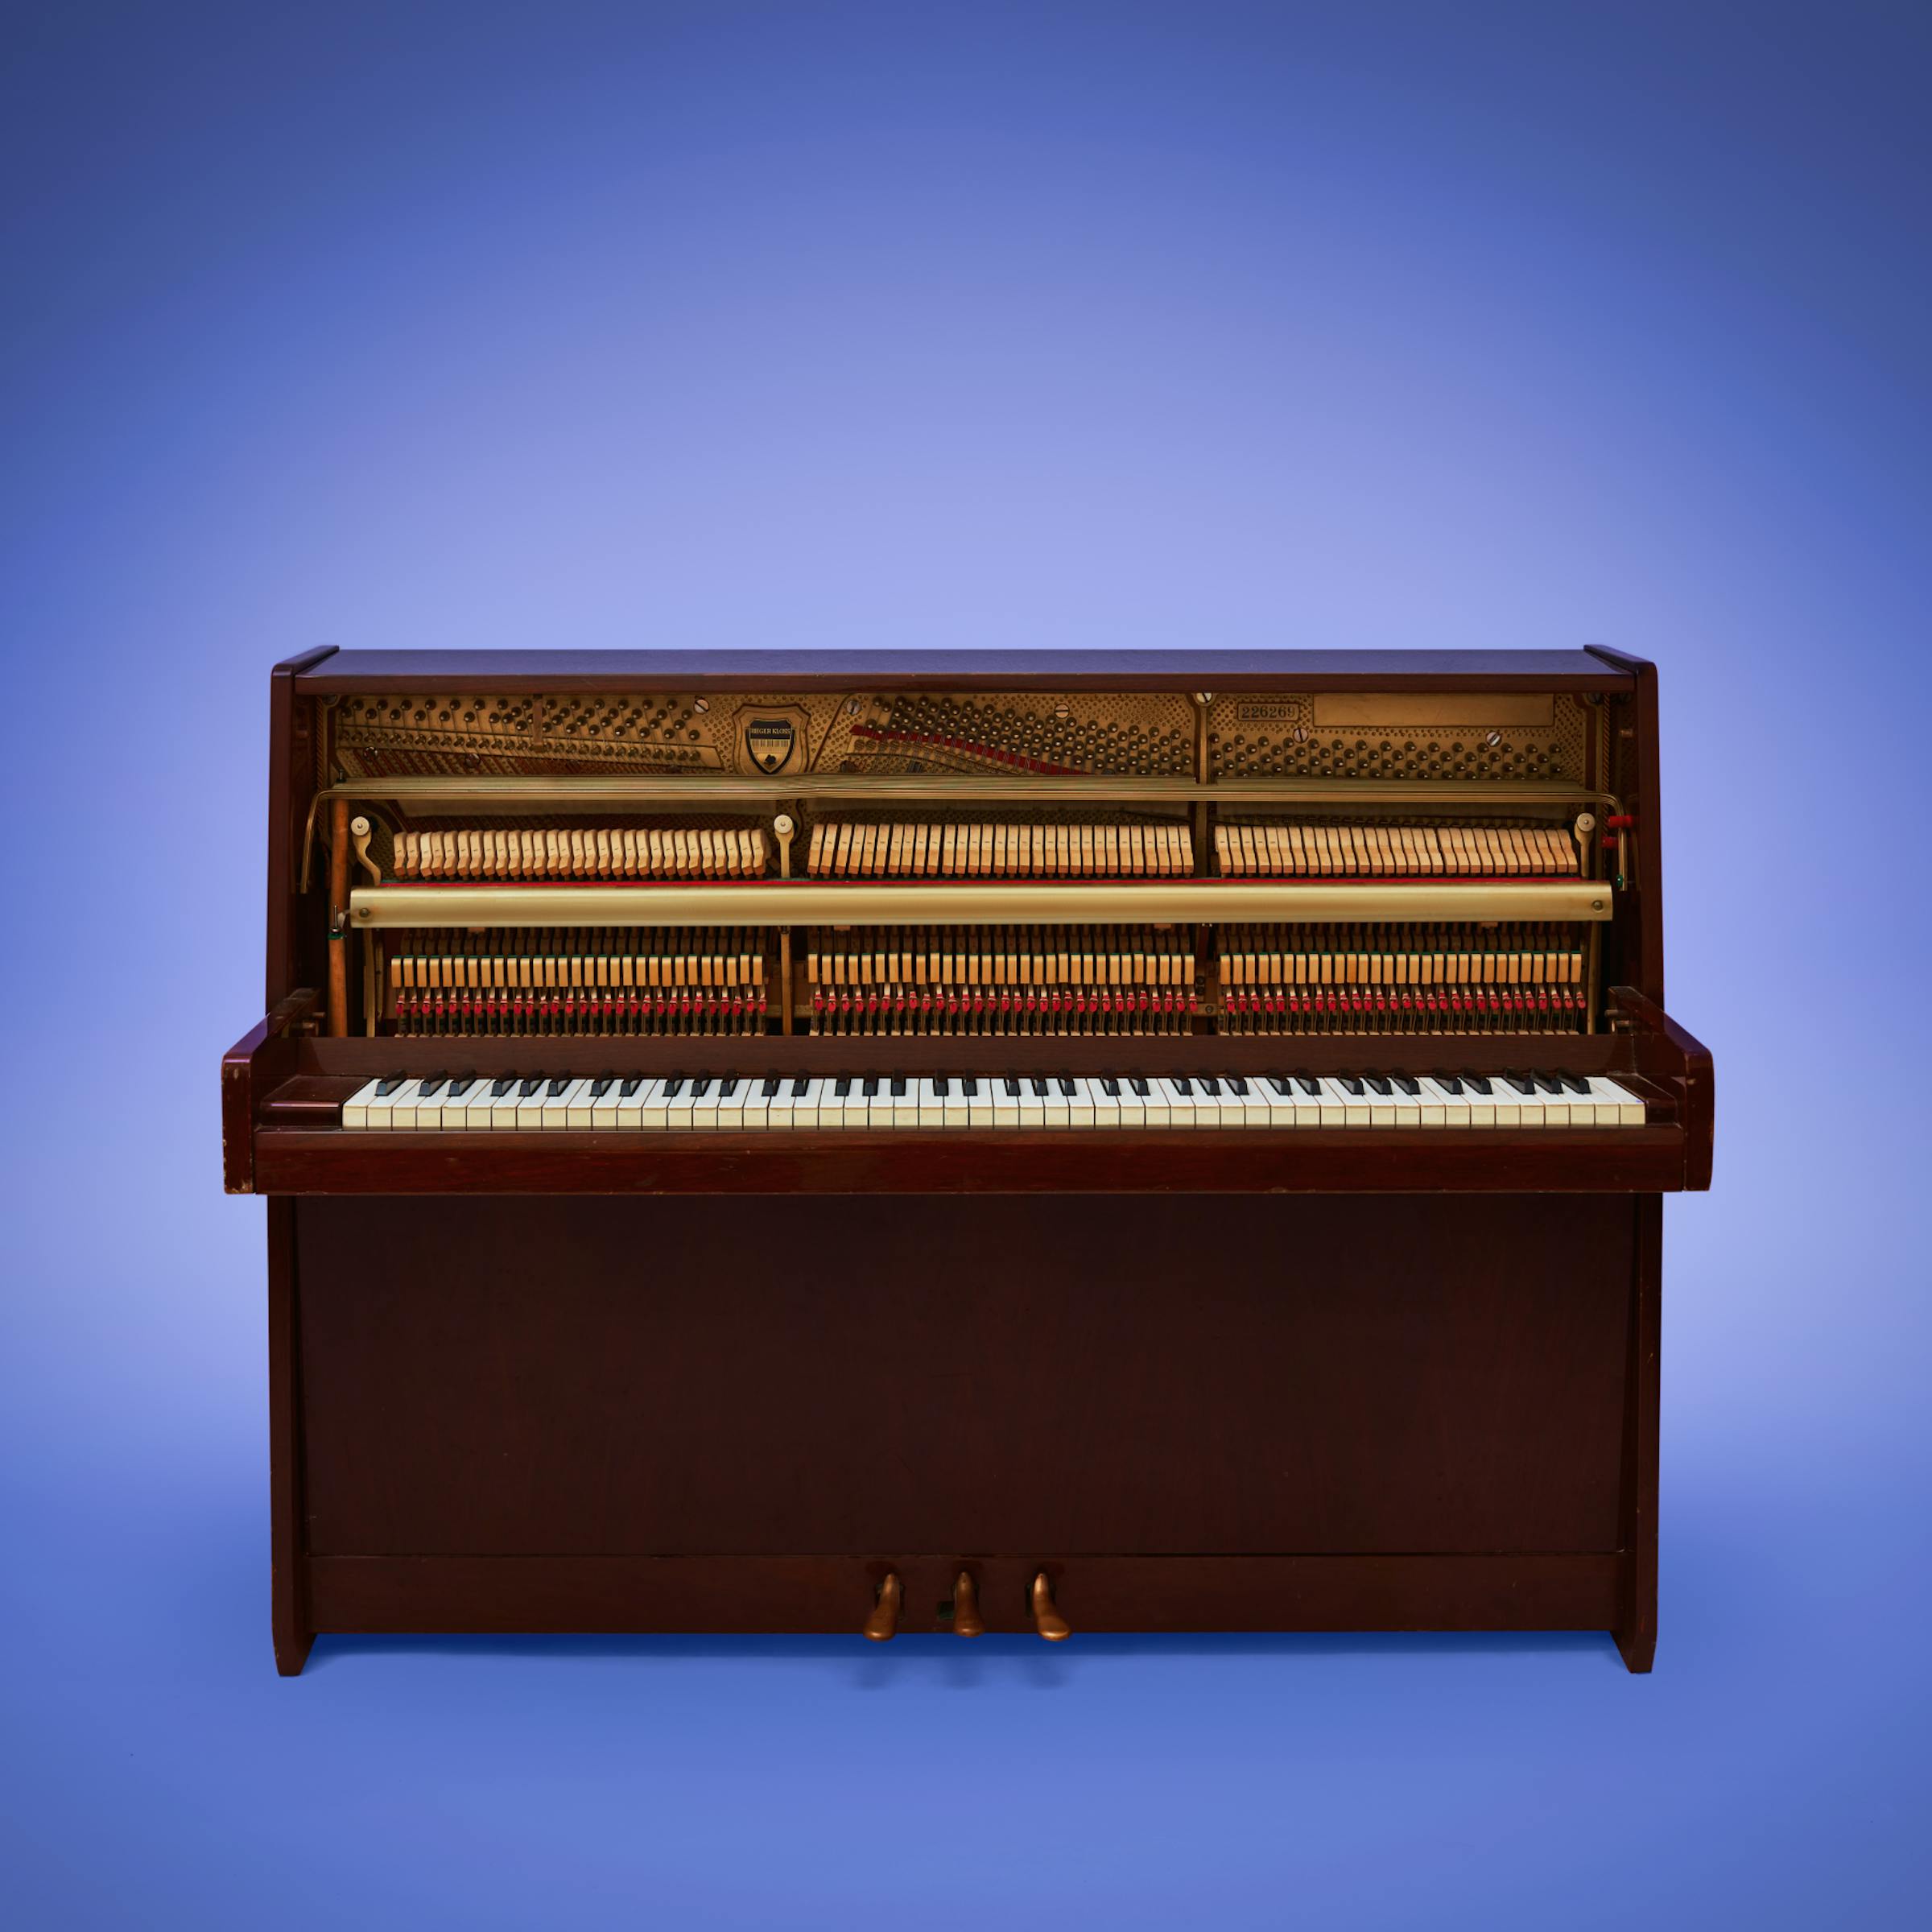 Ableton Upright Piano